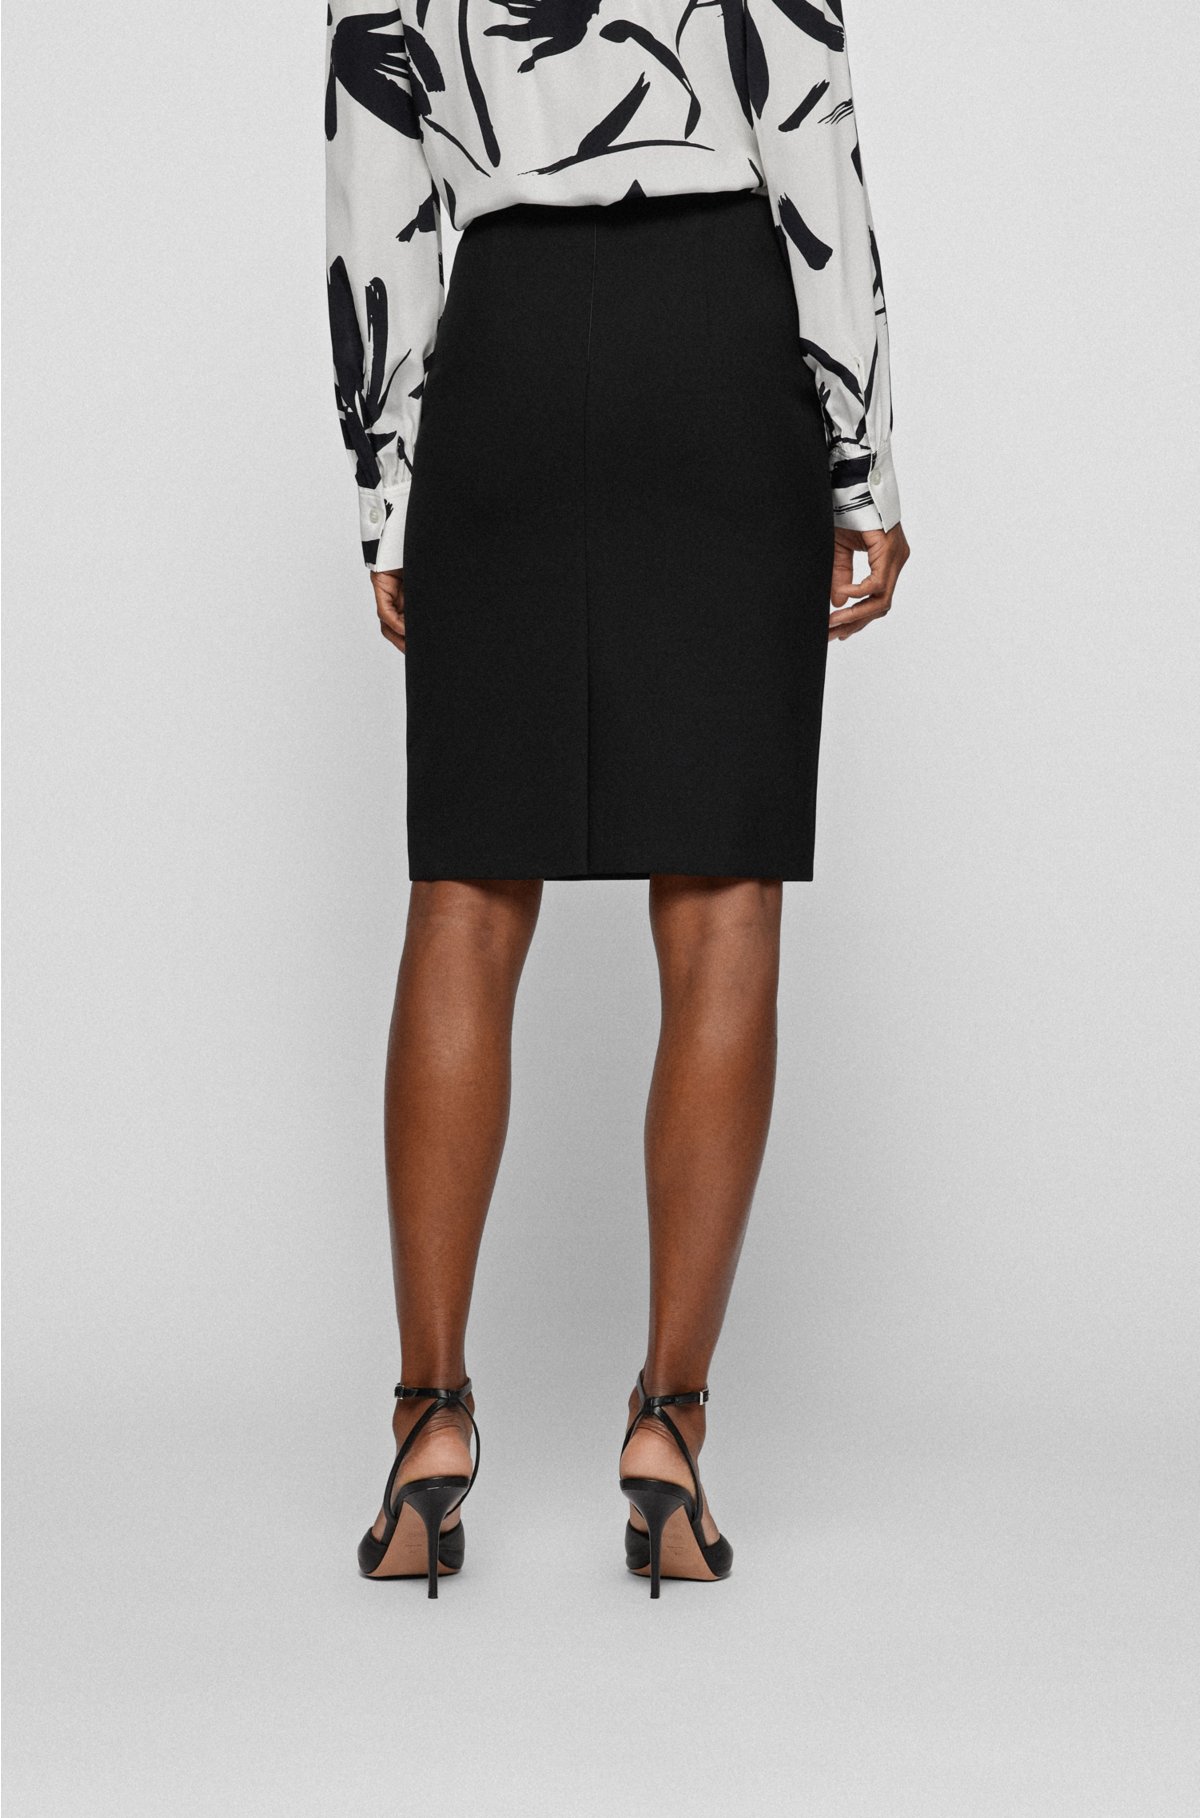 Black Pencil Skirt (3089356)